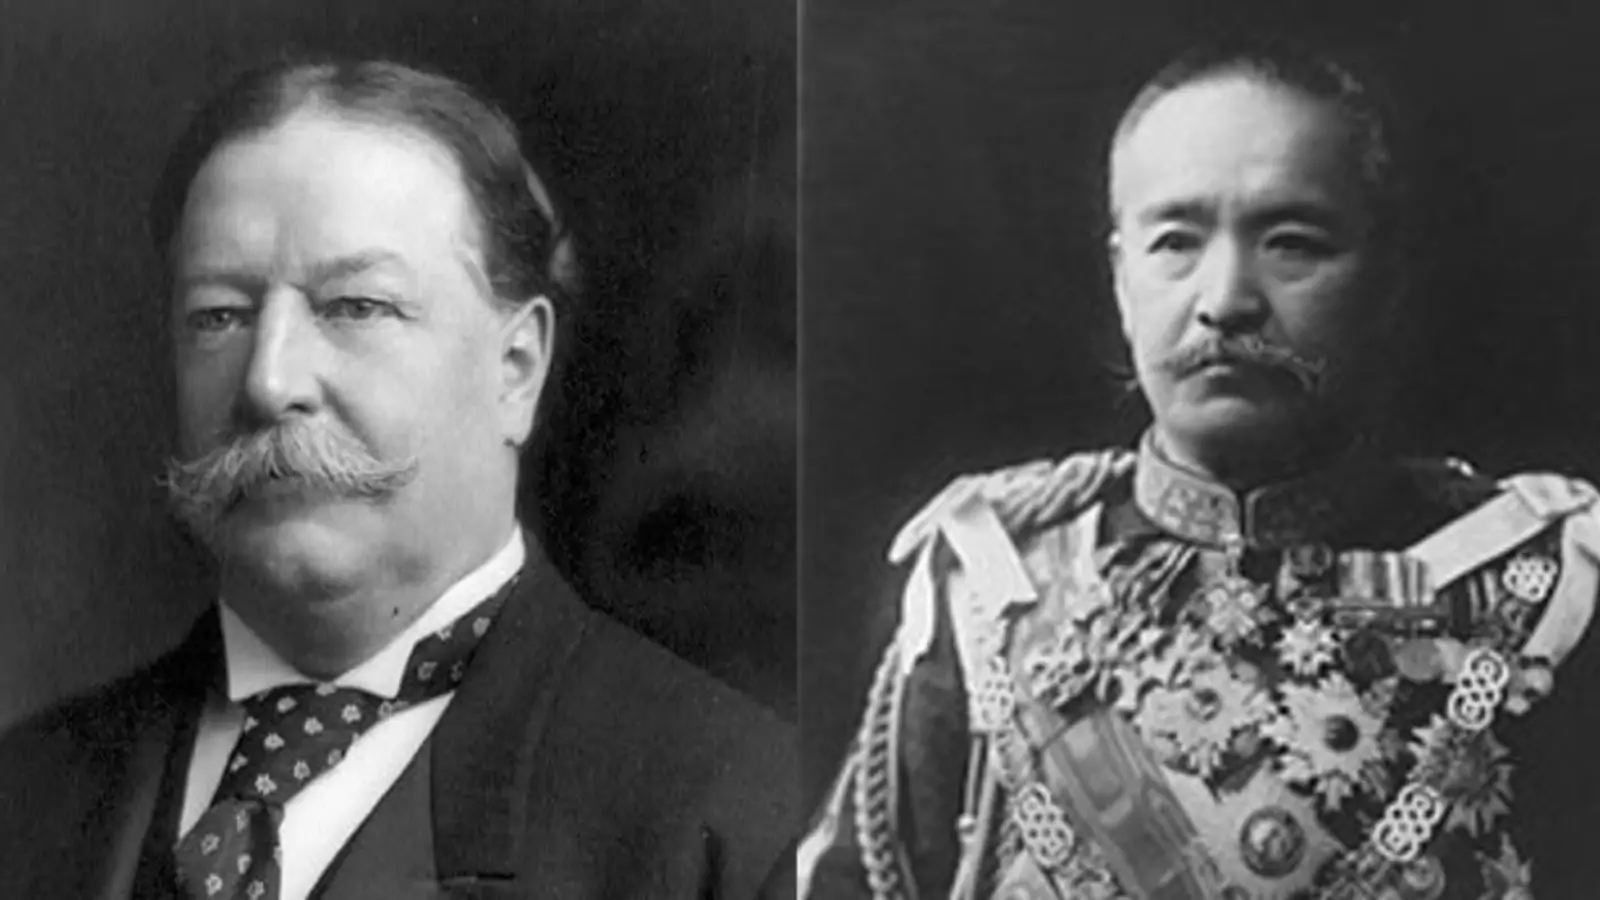 A betrayal that still haunts Korean relations: Taft-Katsura agreement is dated July 29, 1905